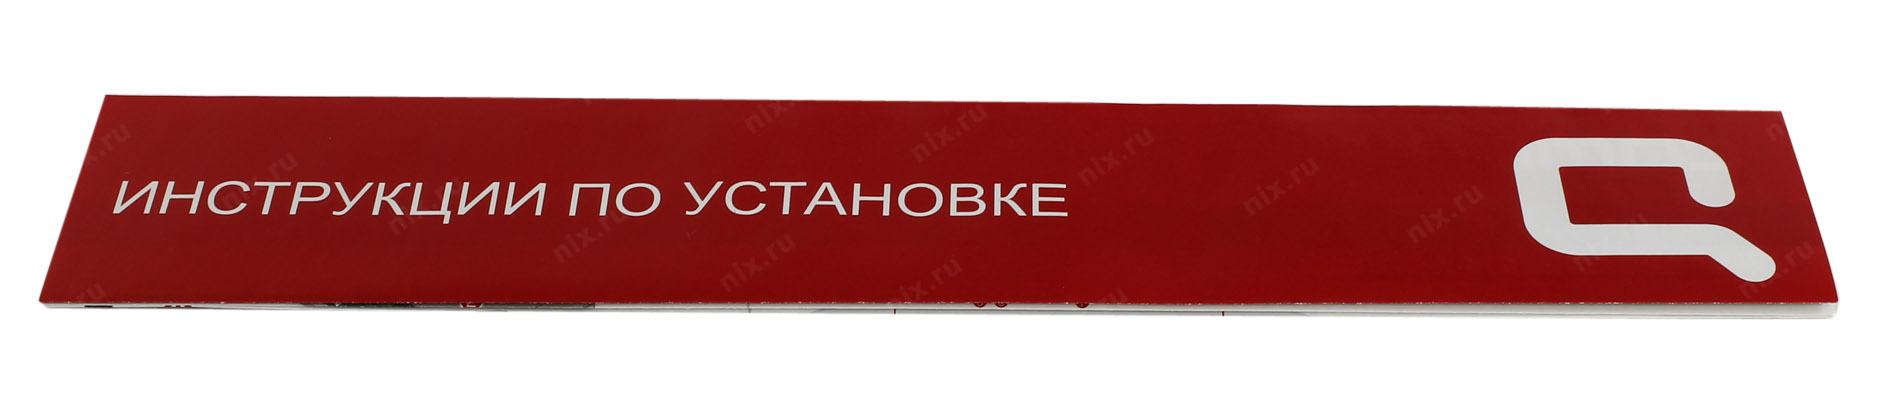 Ноутбук Hp Compaq Presario Cq58-D28er Black Licorice (E6z33ea/E4q58ea)